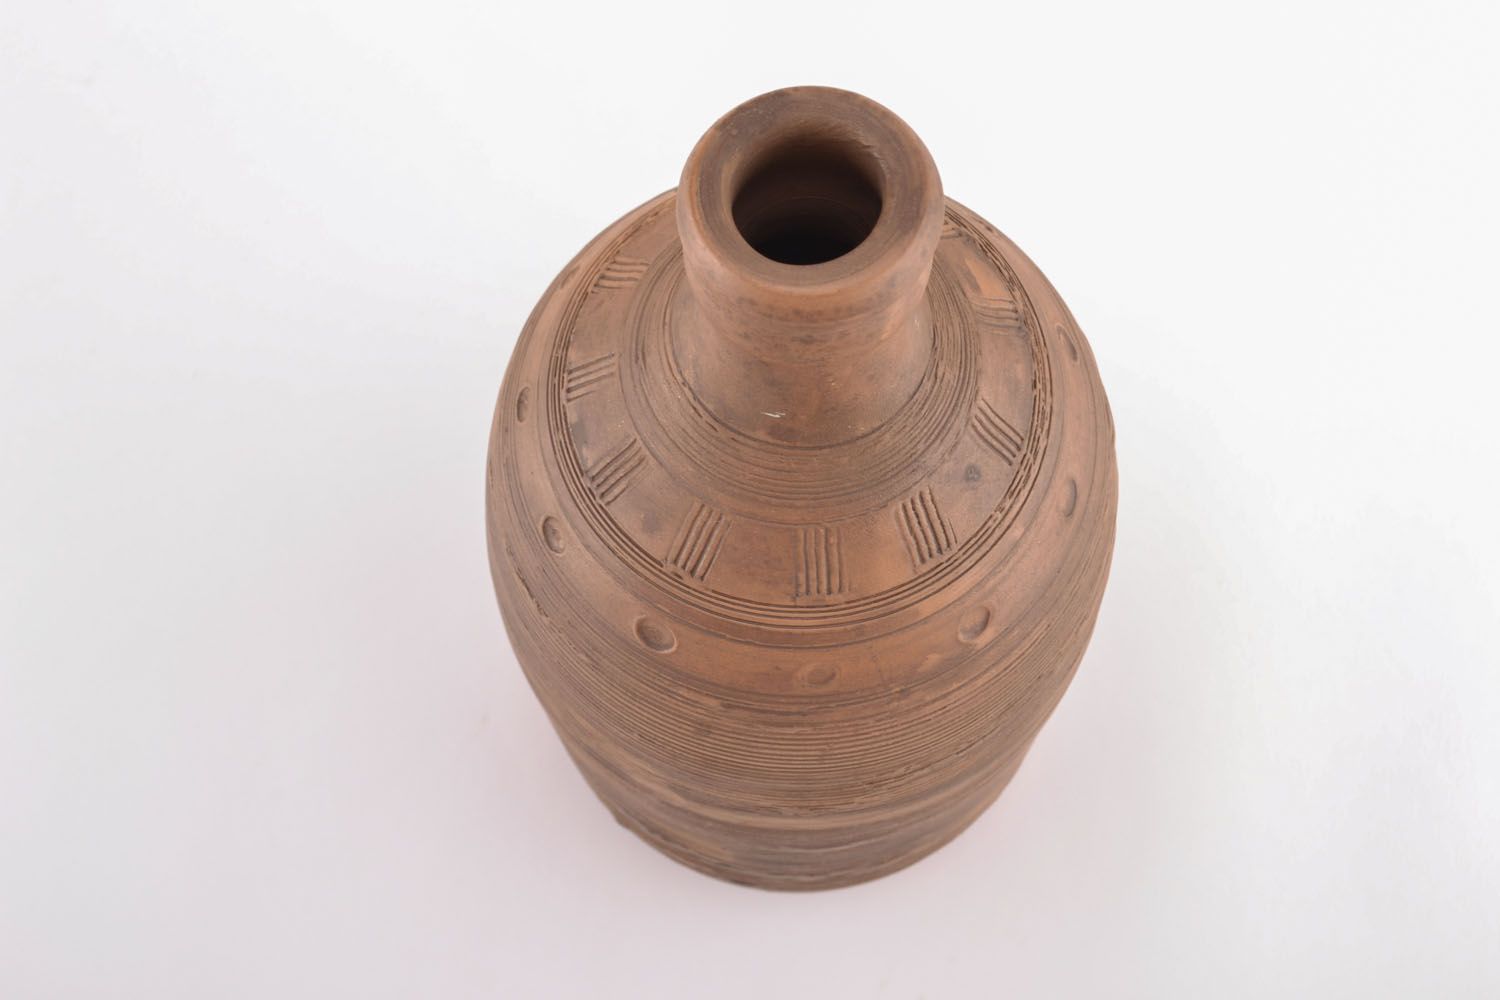 60 oz ceramic bottle shape pitcher made of white clay 2,11 lb photo 2